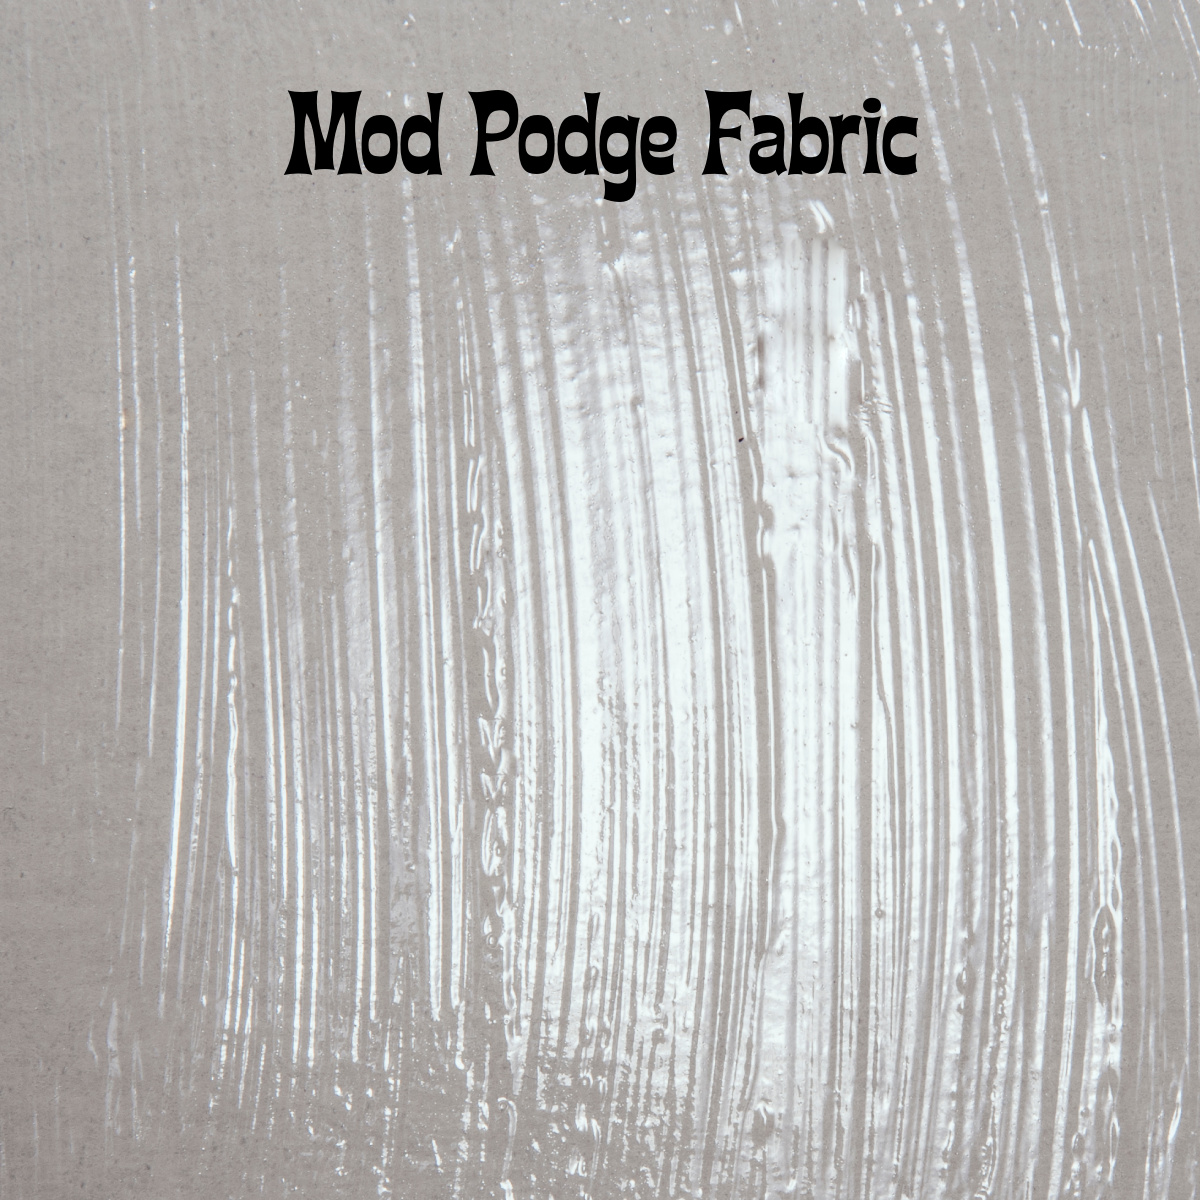 Mod Podge Fabric swatch